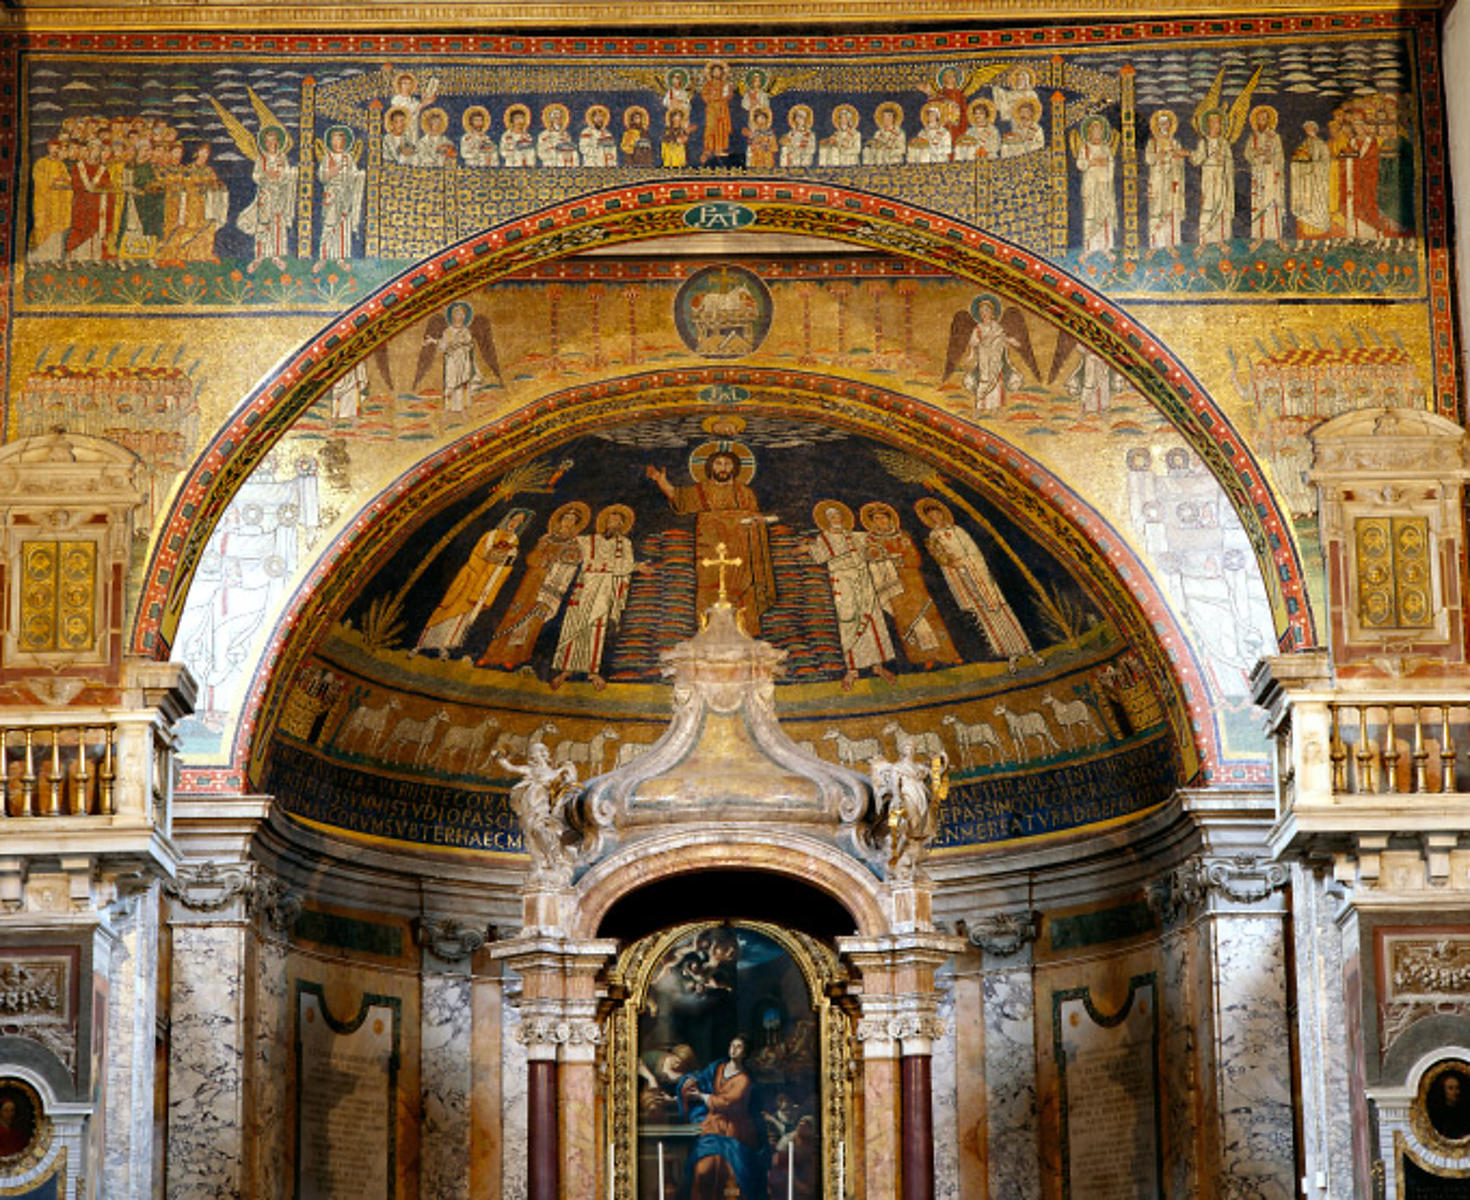 basilica-prassede-roma.jpg - 459.21 kb